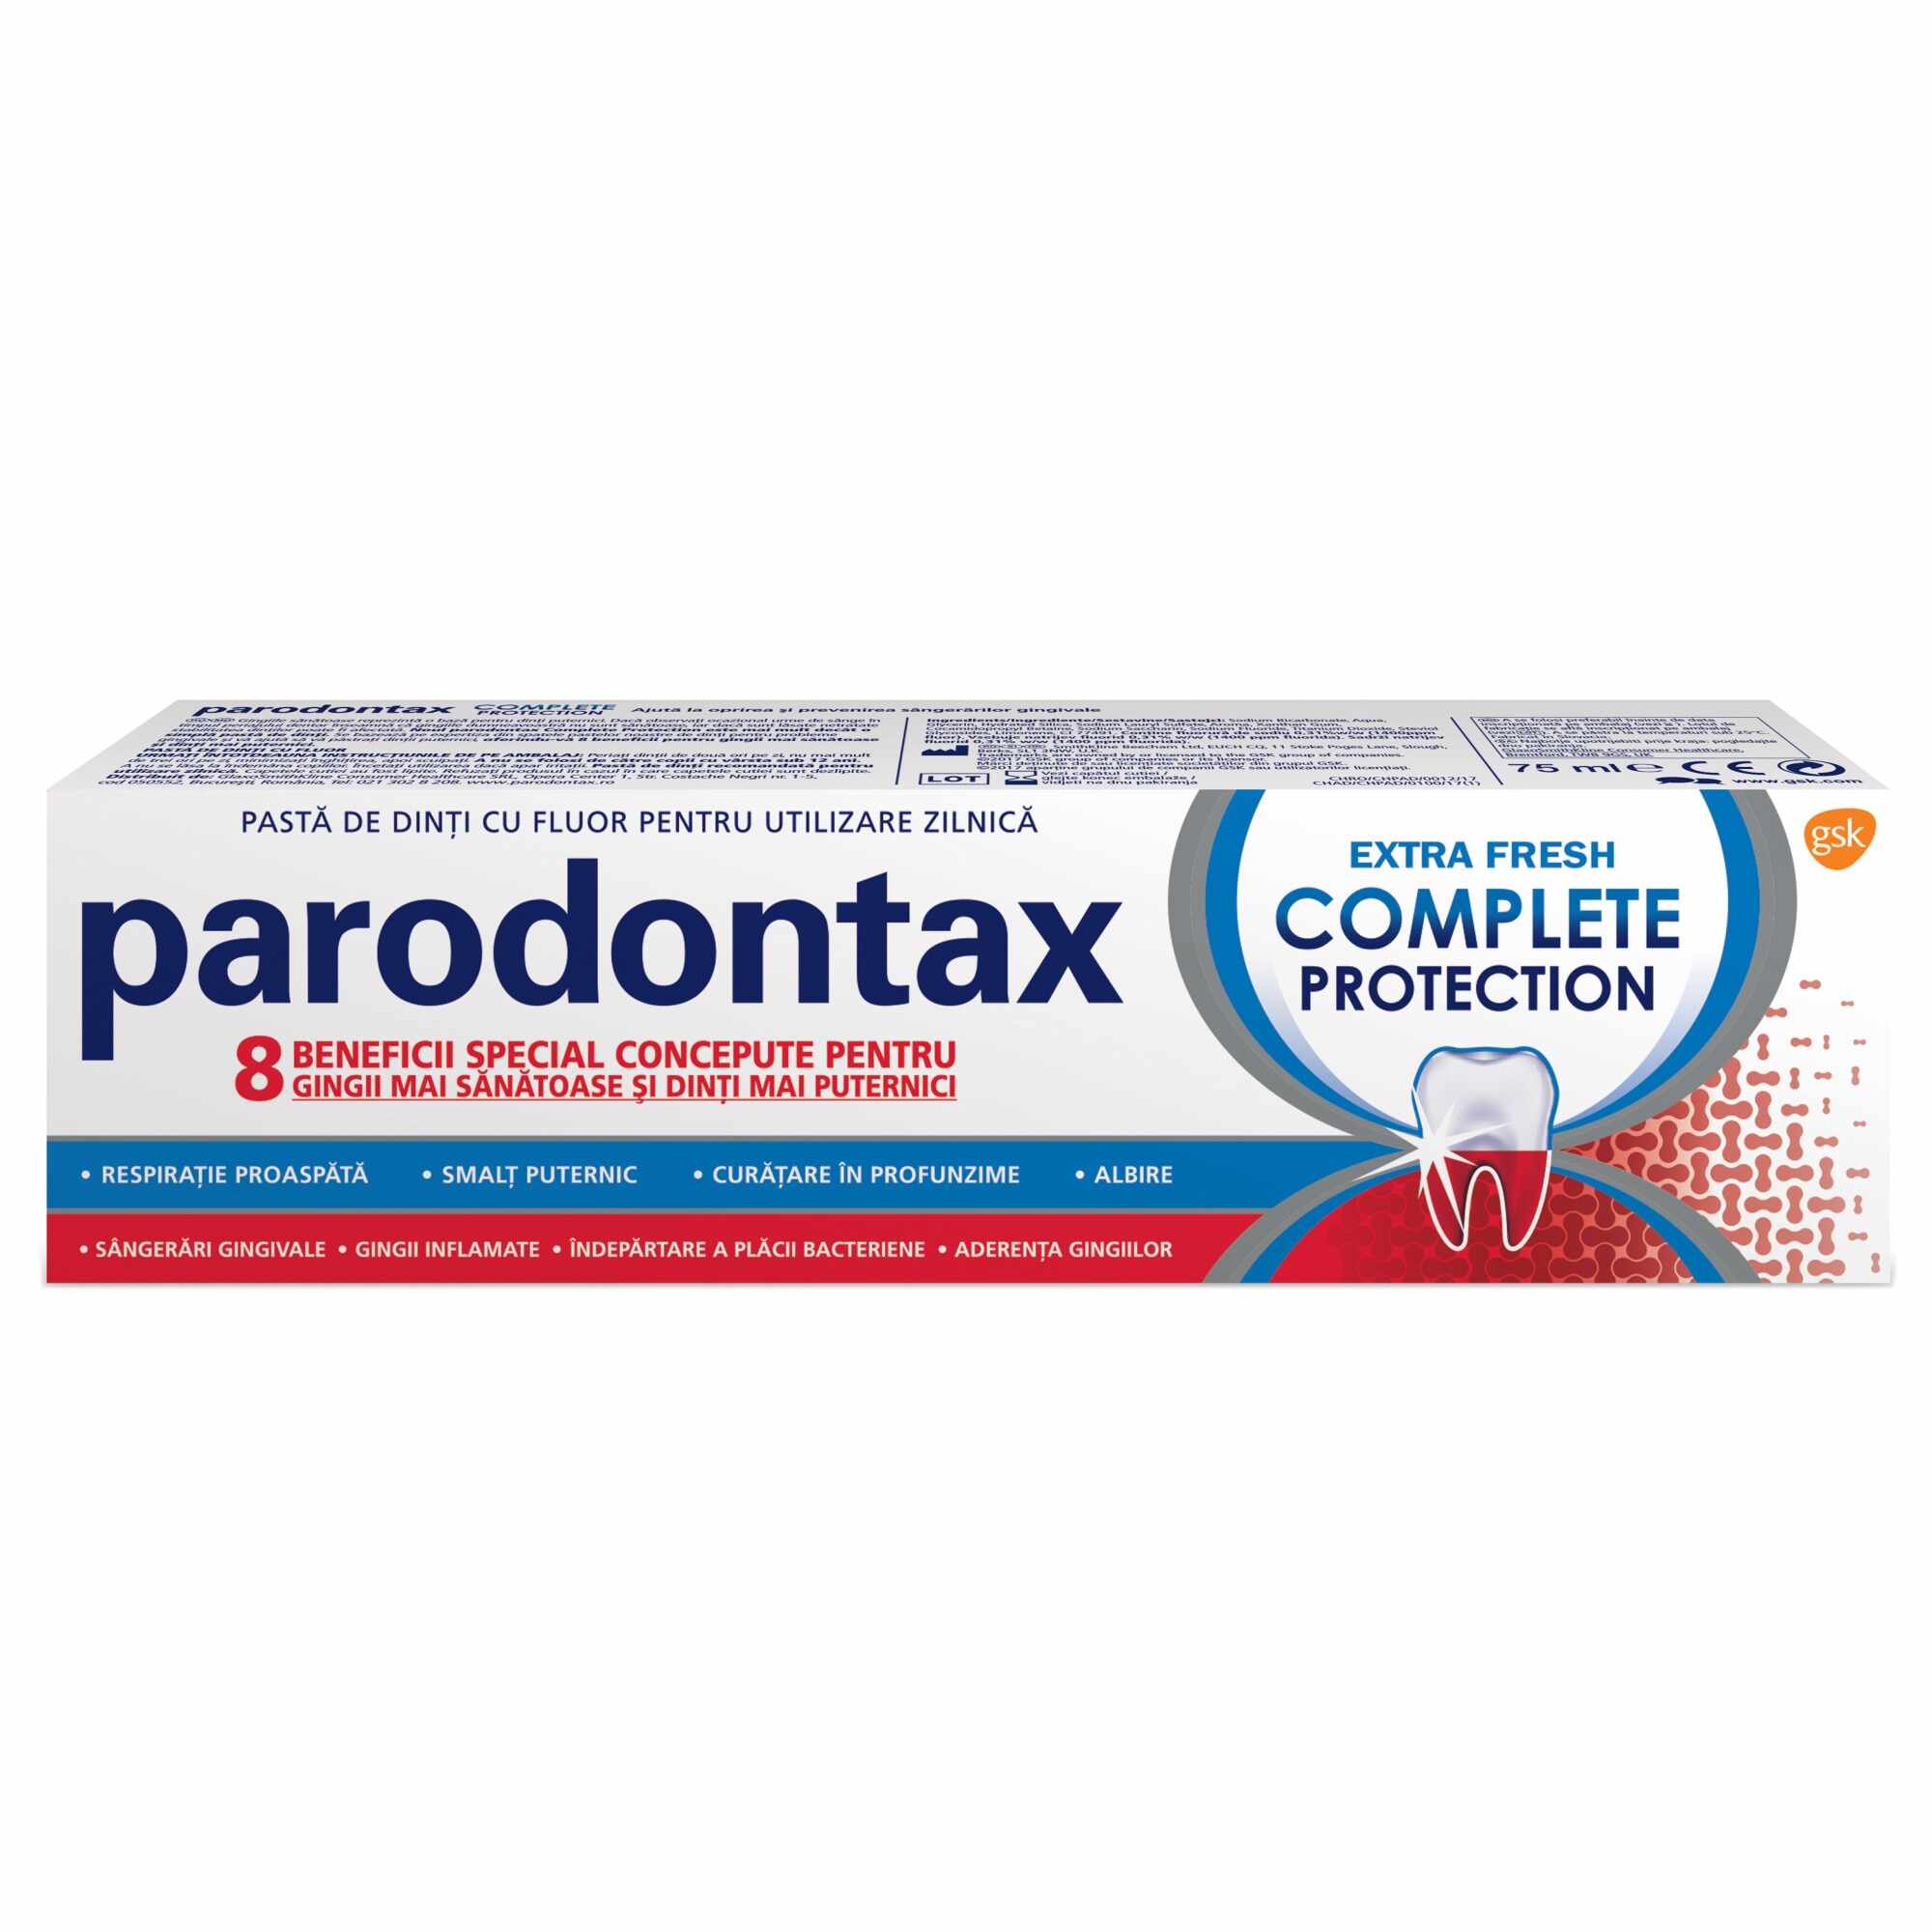 Parodontax Pasta de Dinti Complete Protection Extra Fresh 75 ml